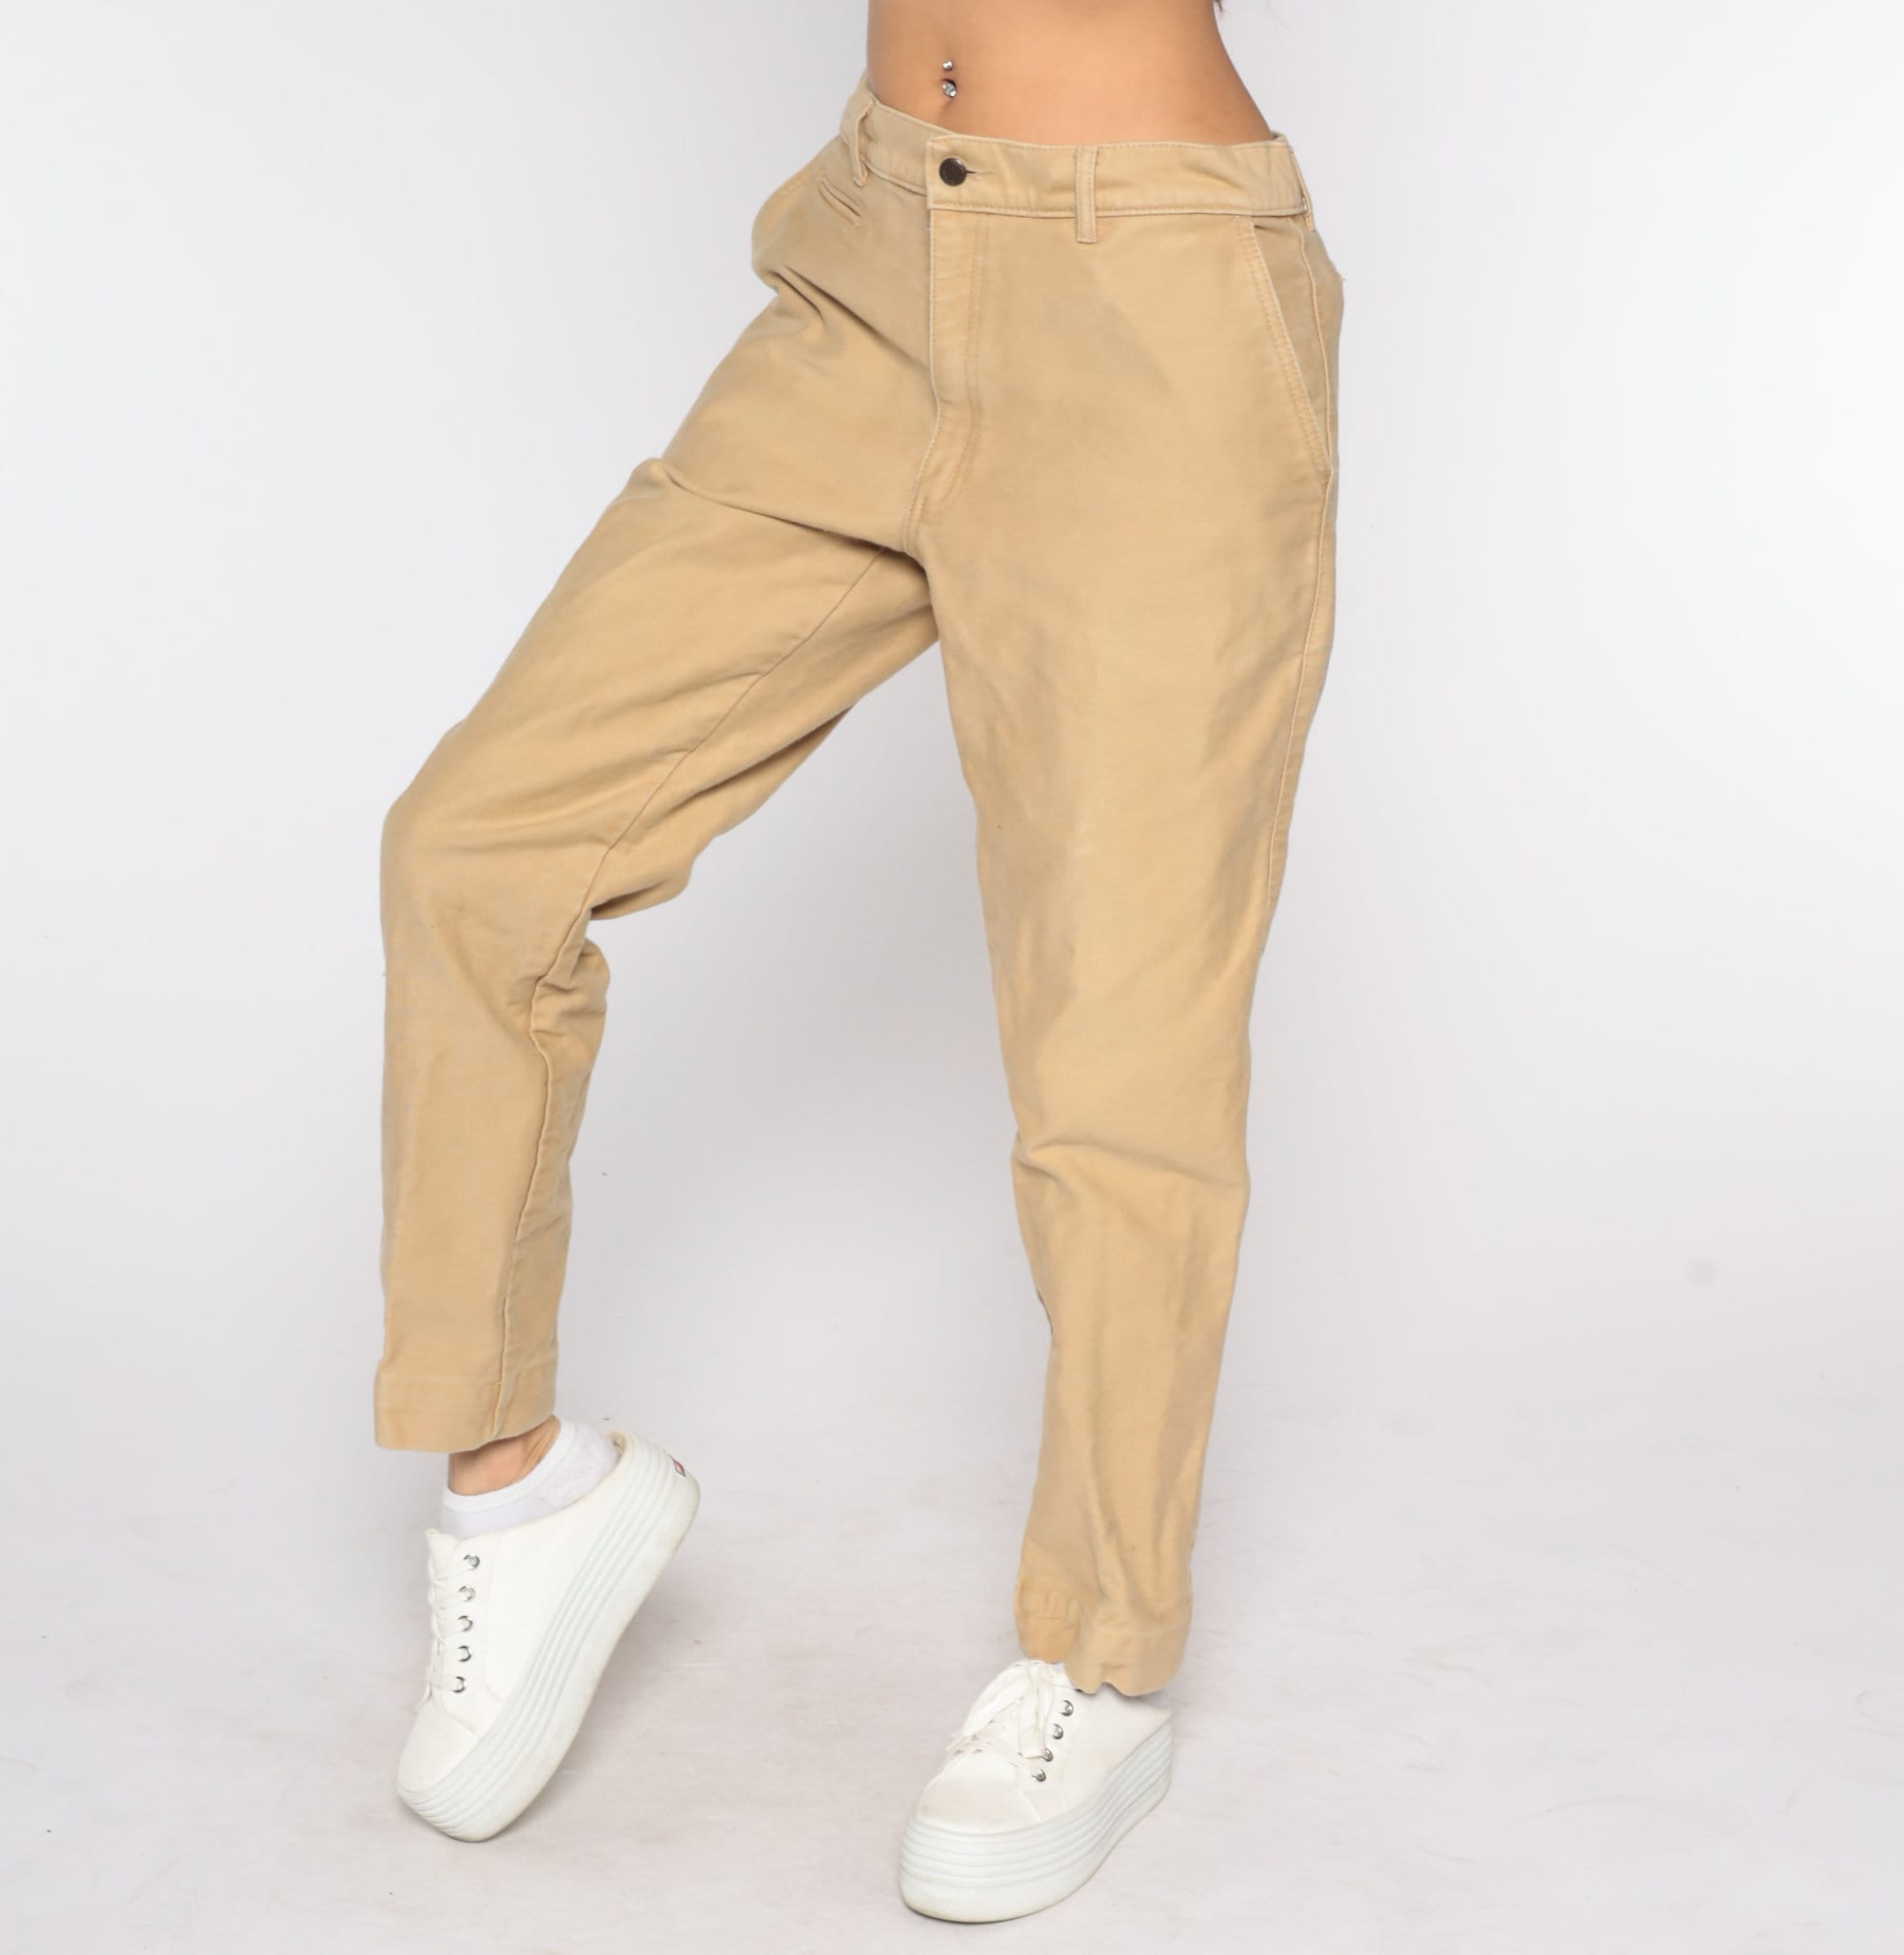 Moleskin Trousers Tan Tapered Pants High Waisted Trousers 80s Pants 1980s Vintage Slacks Pants Australian Large L 33